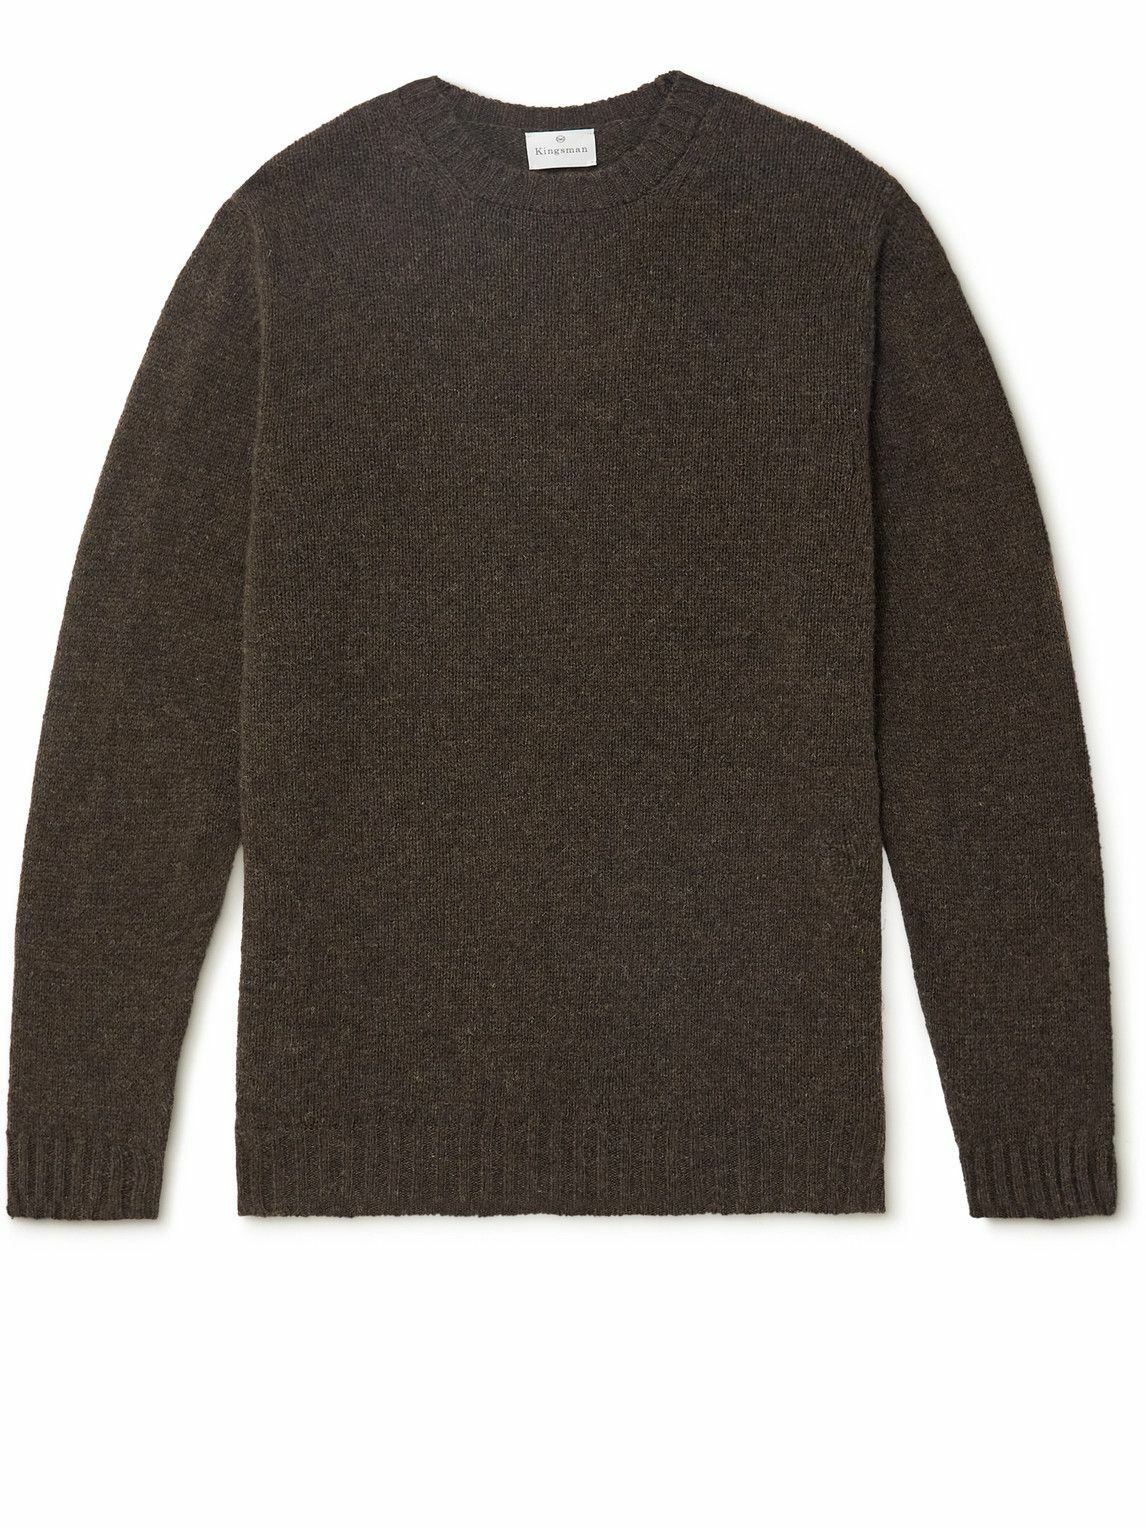 Kingsman - Shetland Virgin Wool Sweater - Brown Kingsman